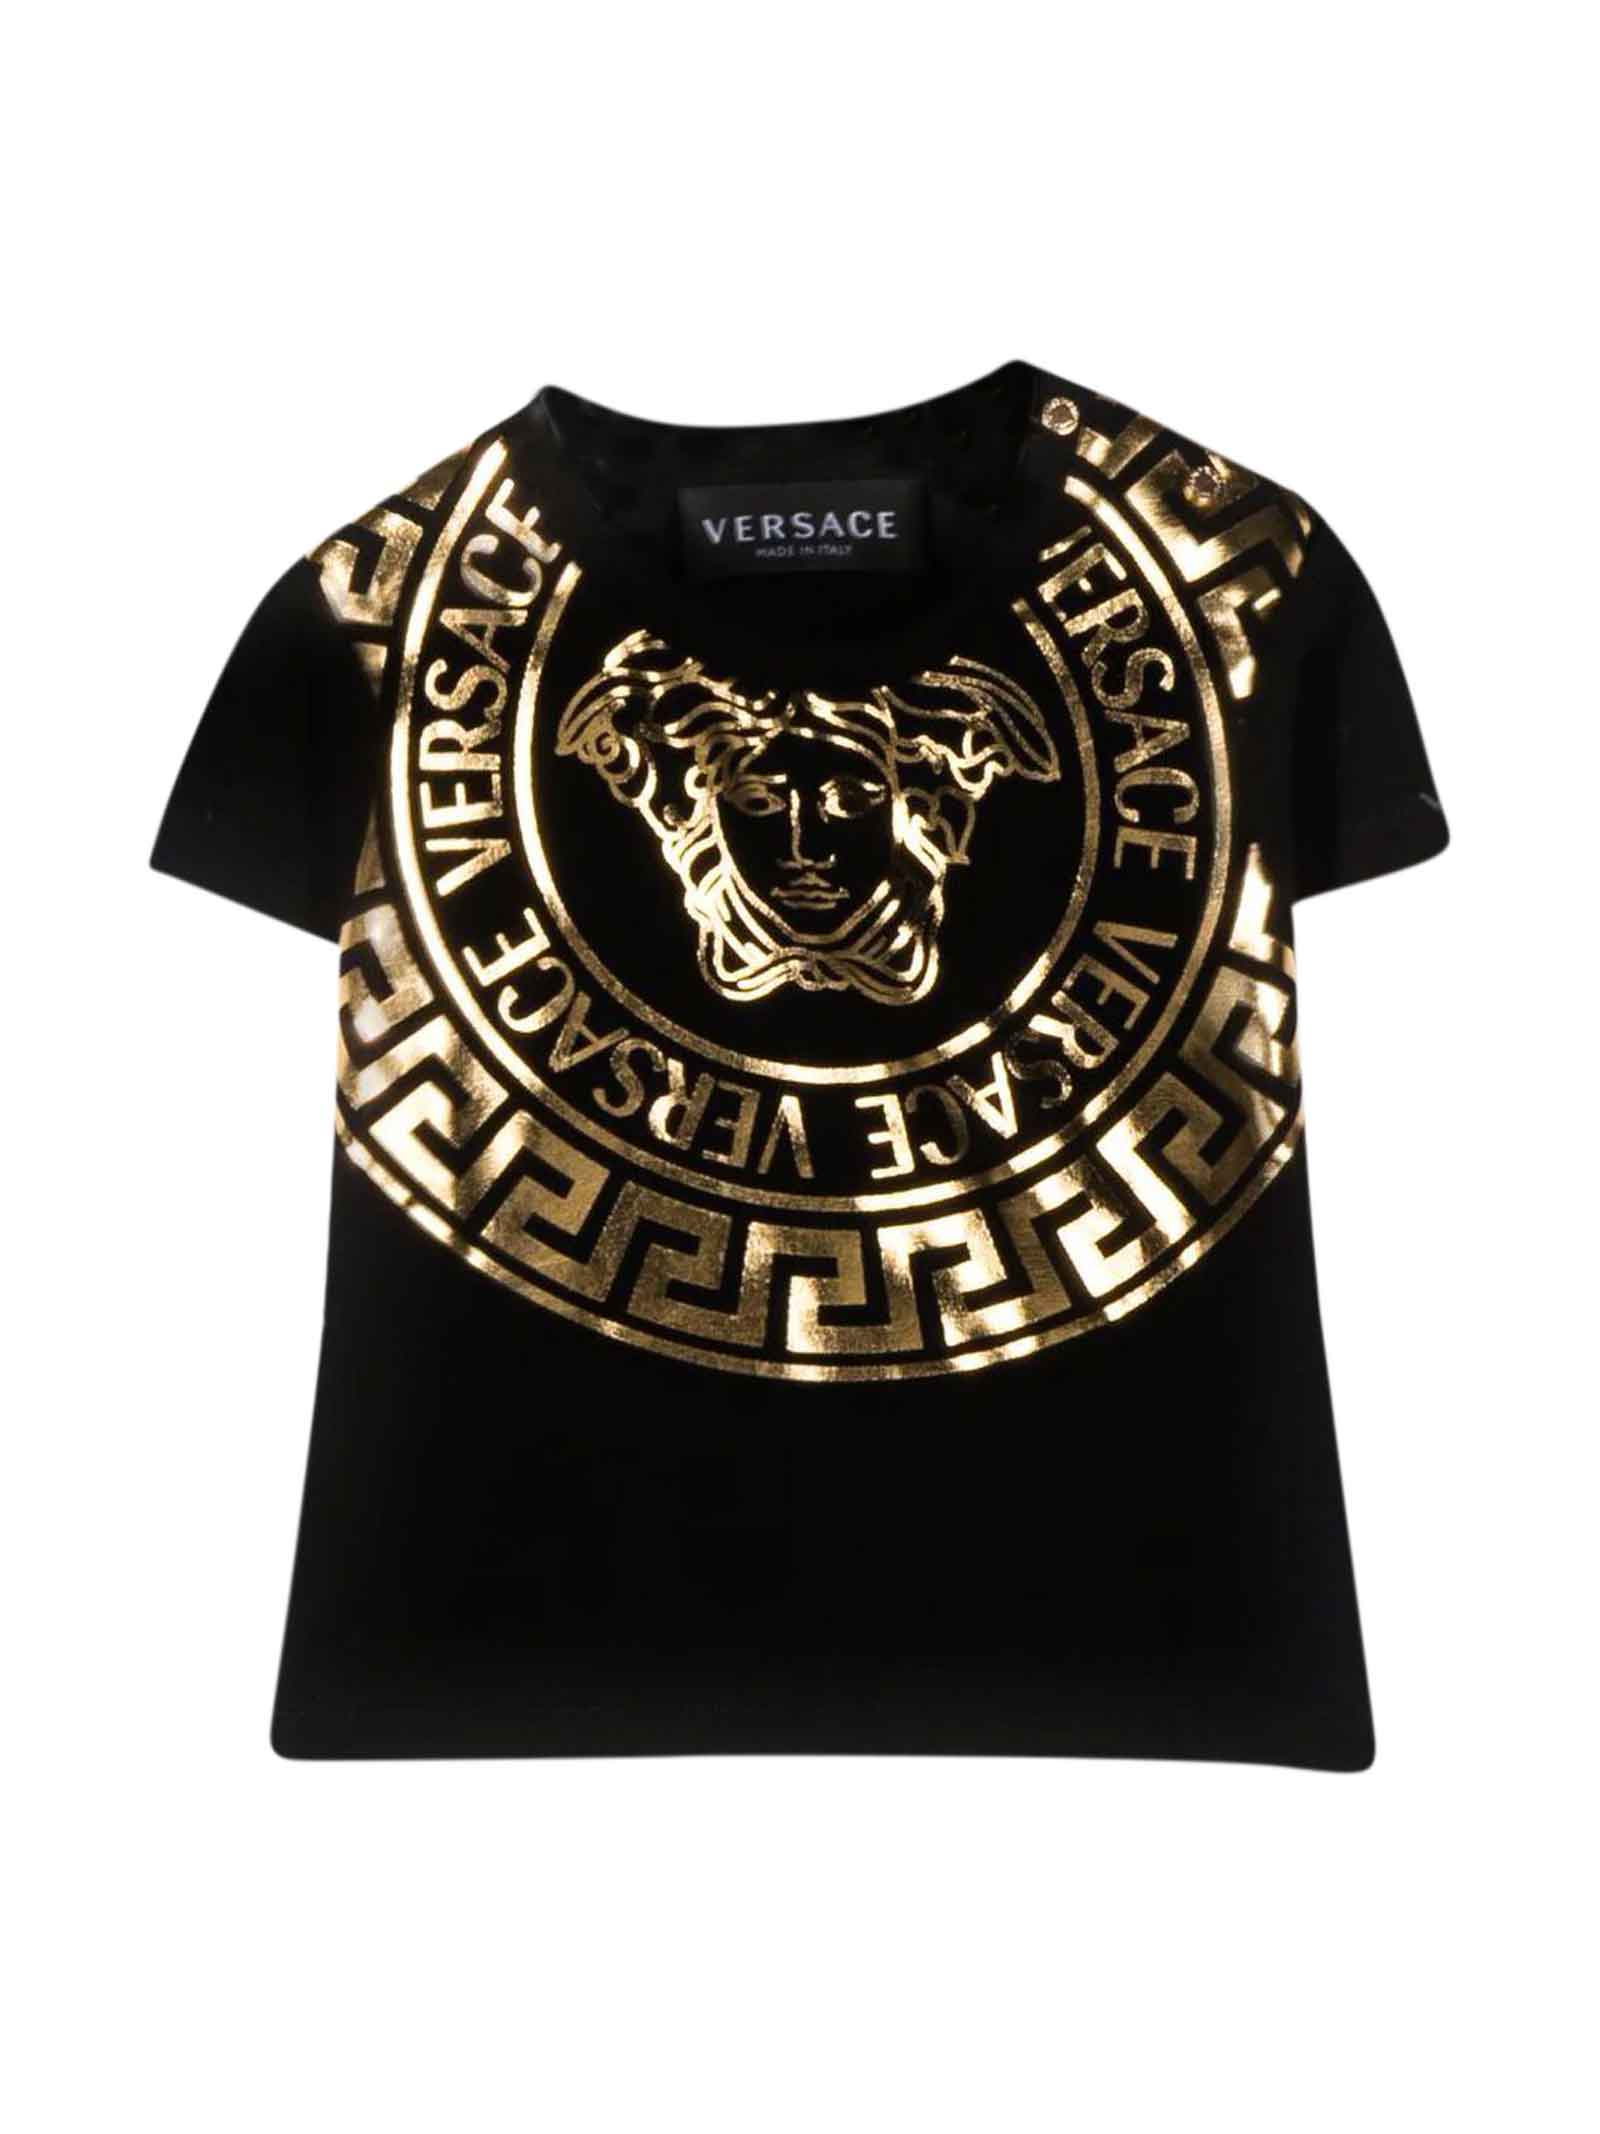 Versace Black And Gold Newborn T-shirt Kids